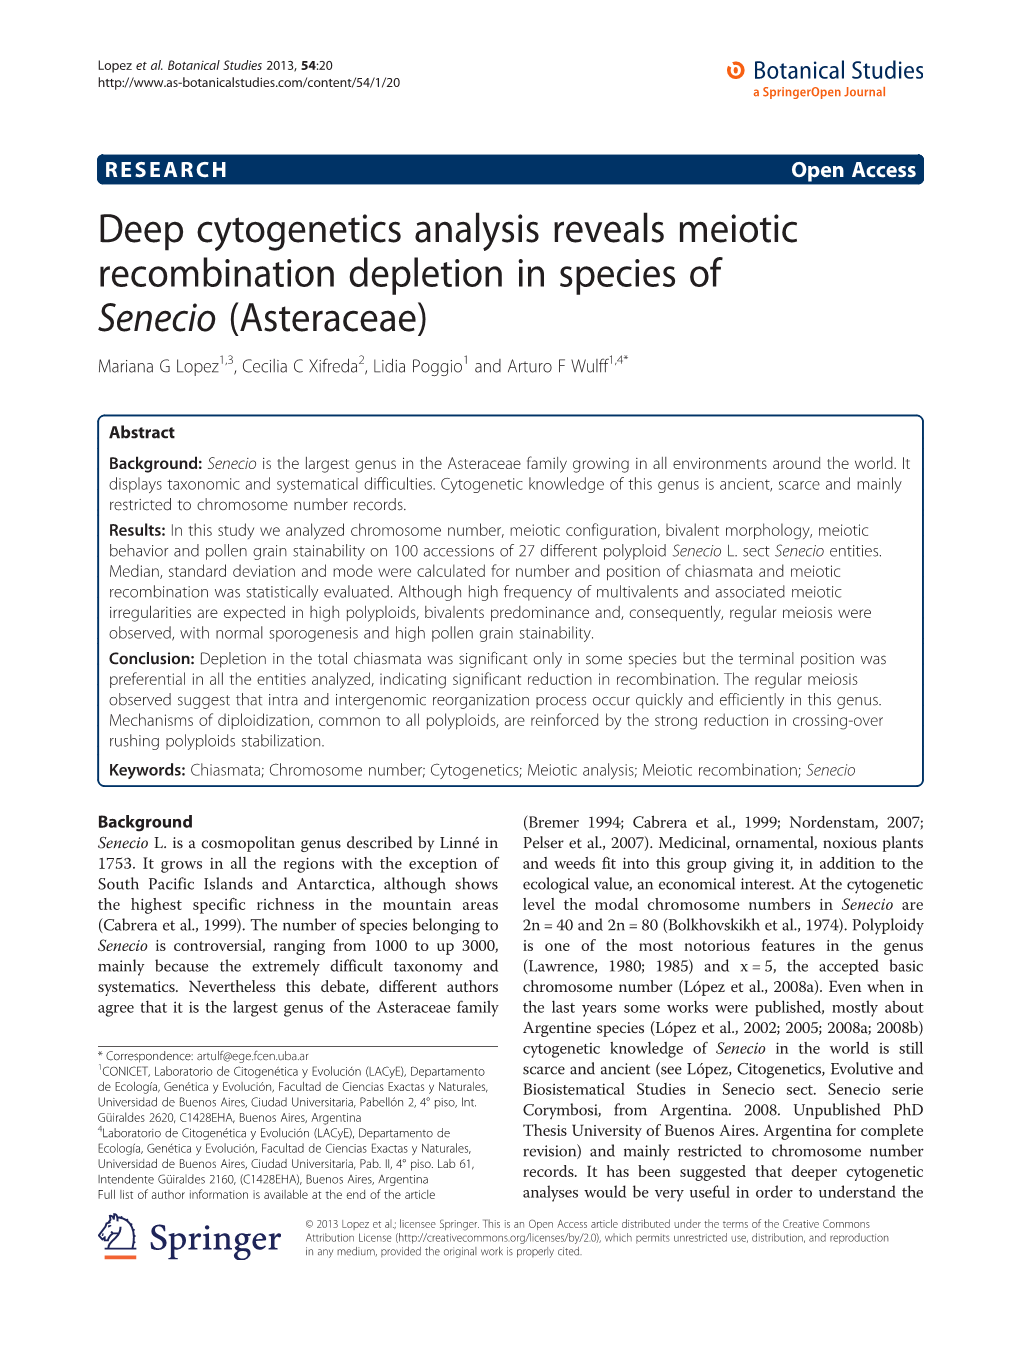 Deep Cytogenetics Analysis Reveals Meiotic